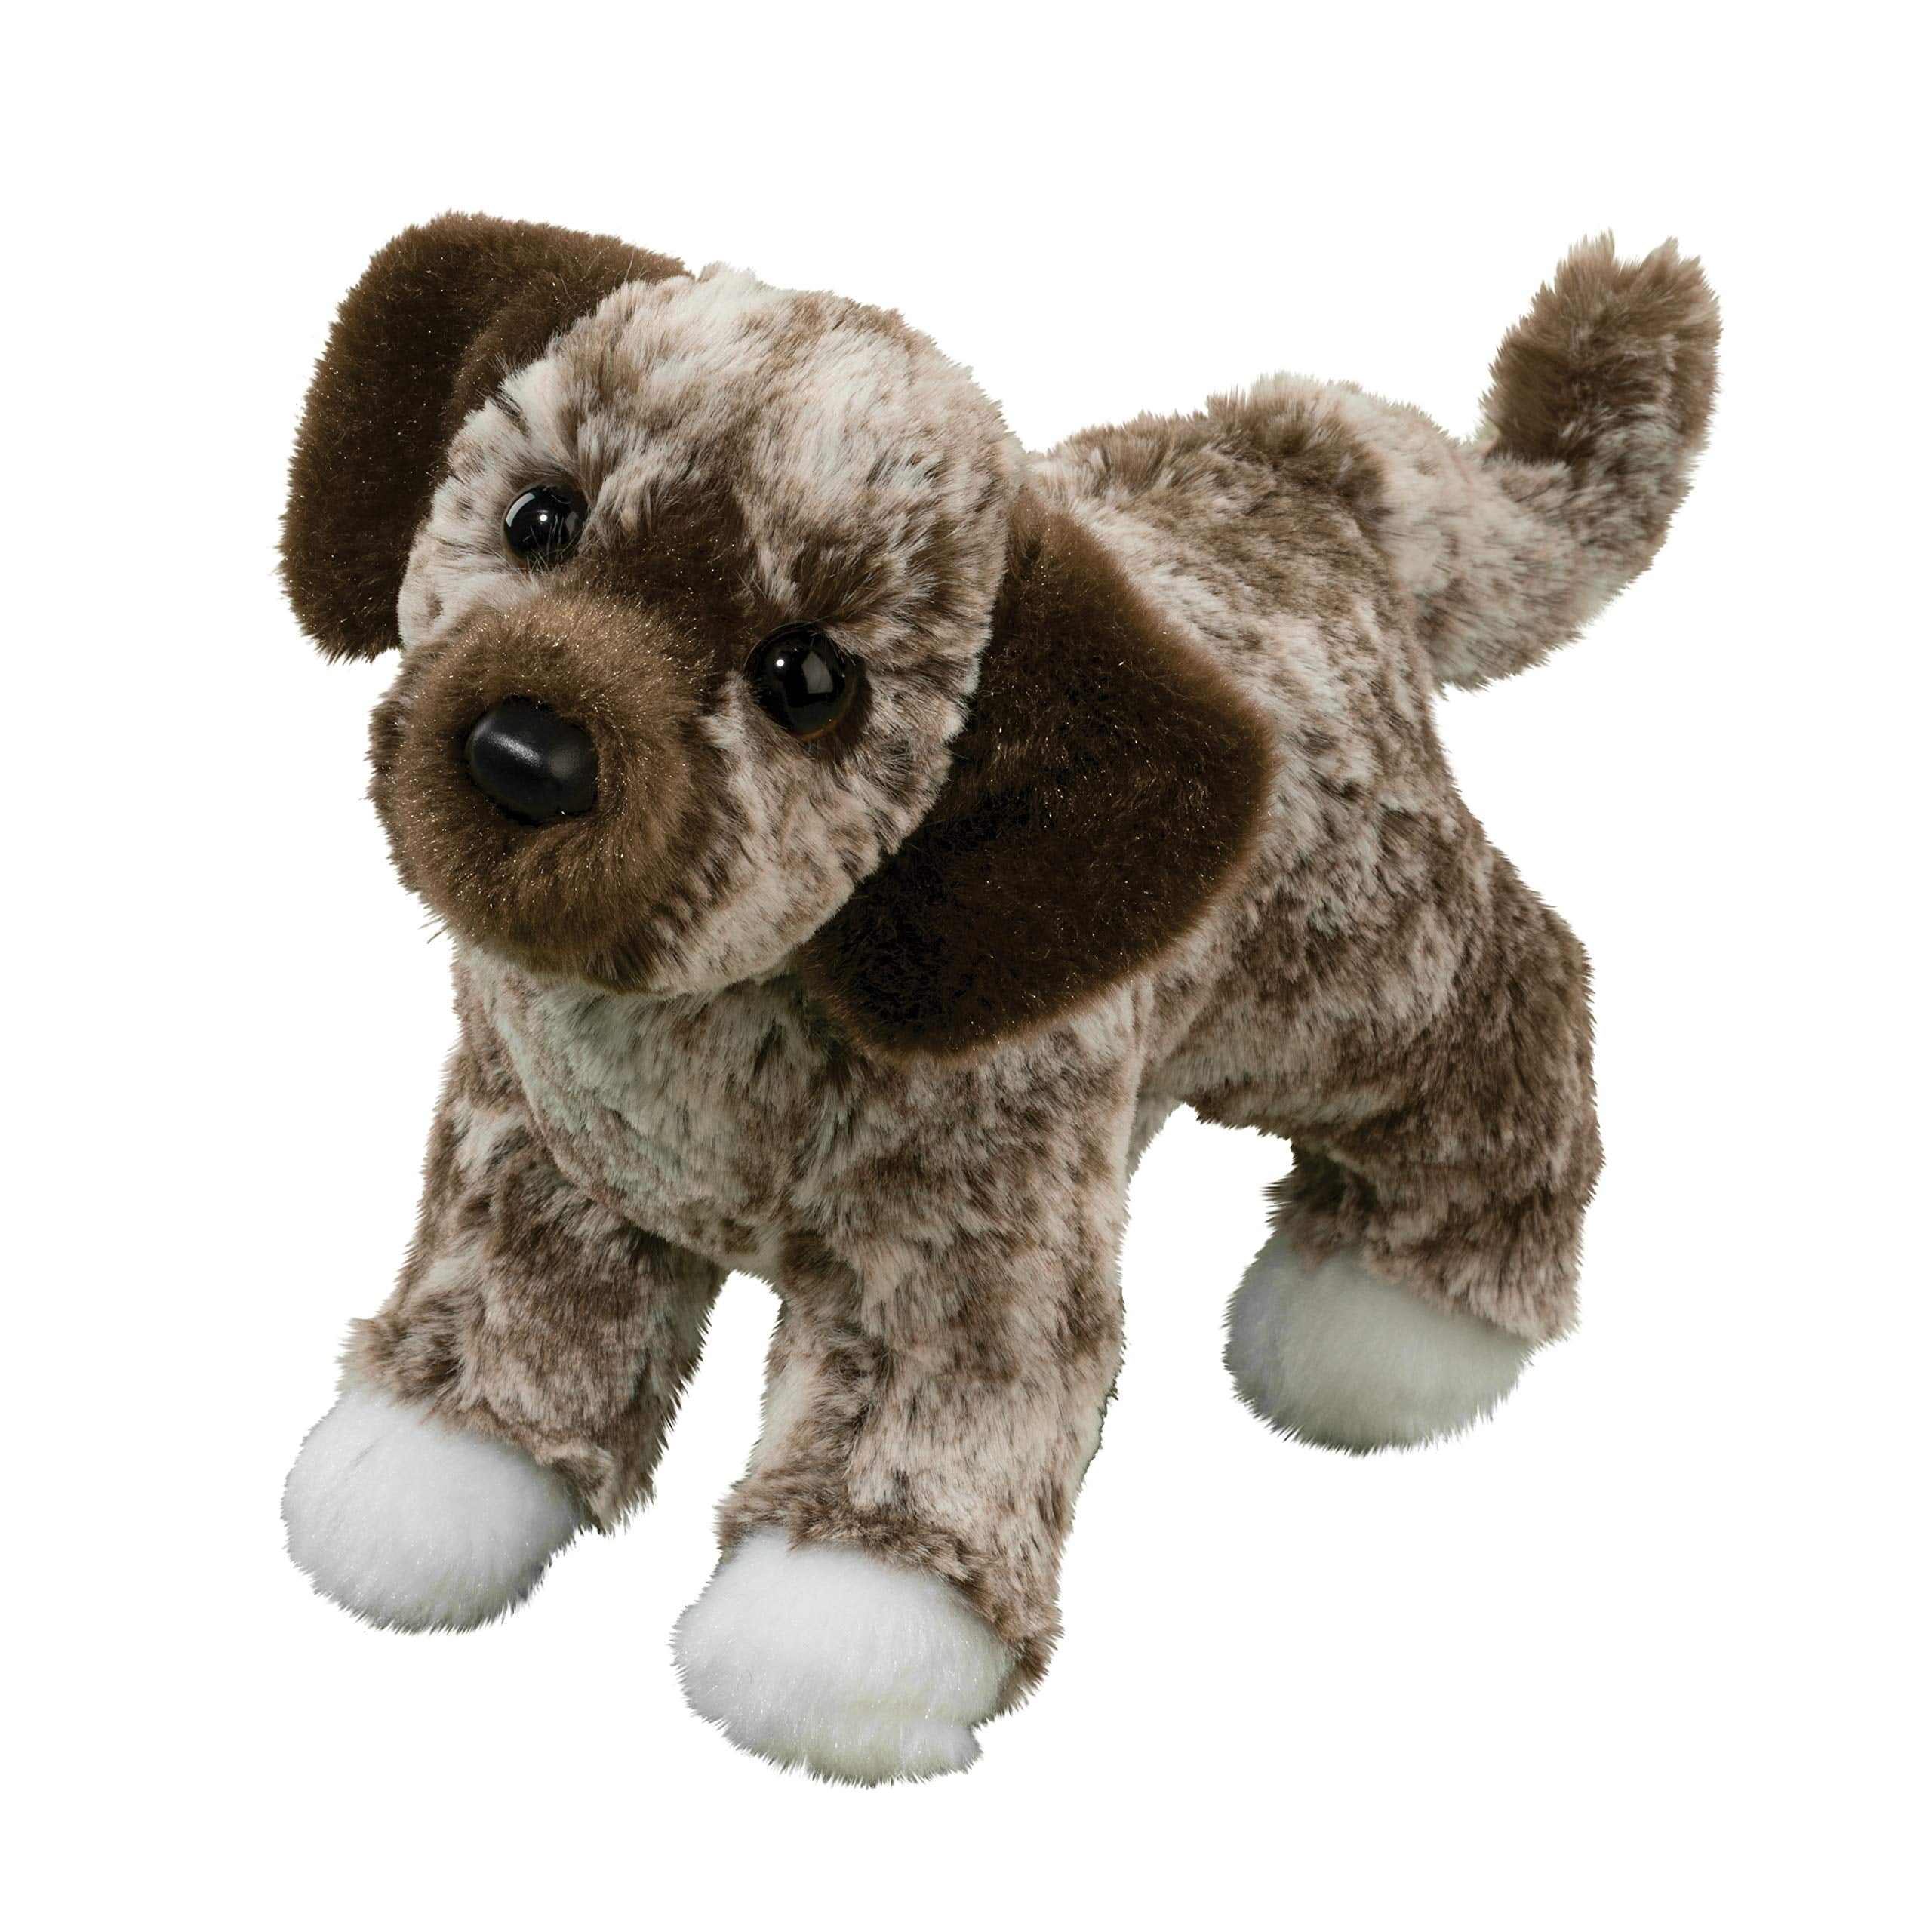 Taya 9" Chow Chow by Douglas stuffed animal toy dog plush golden brown puppy 